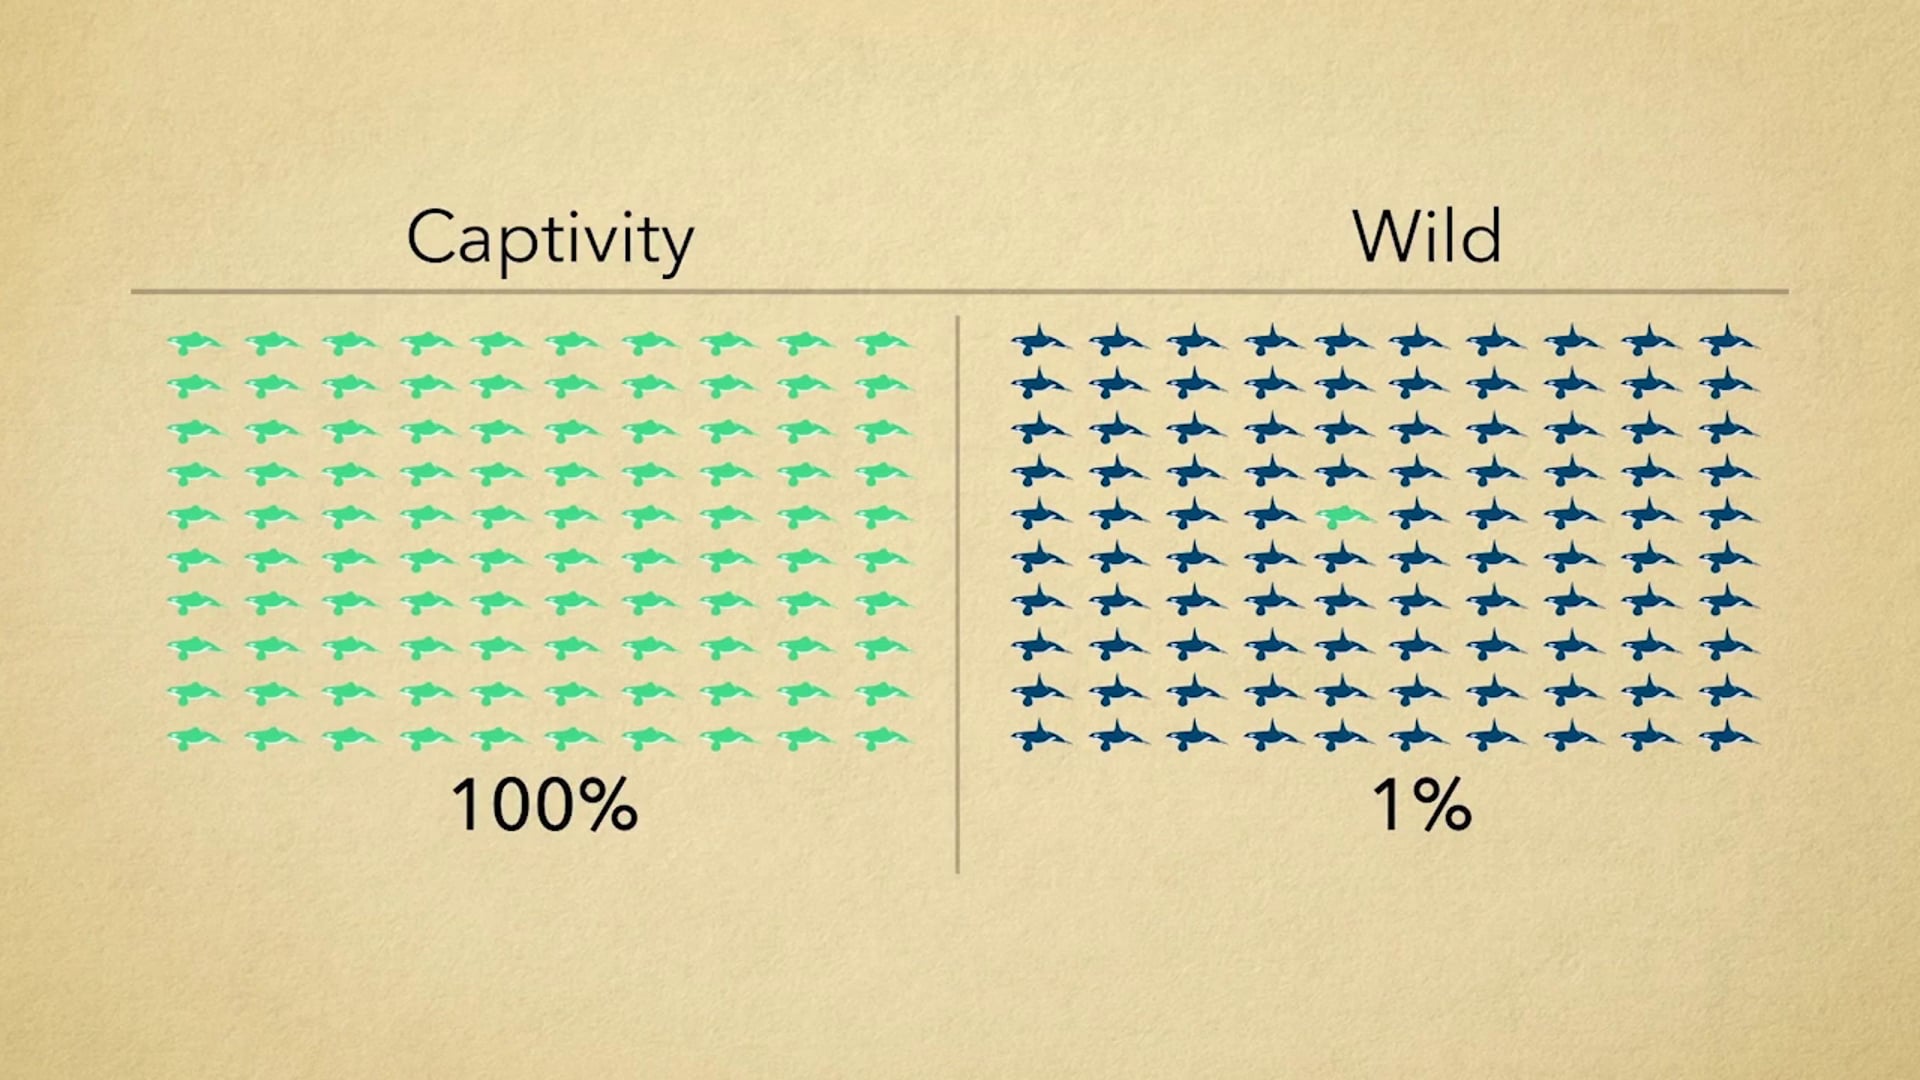 Orcas: Wild vs Captive